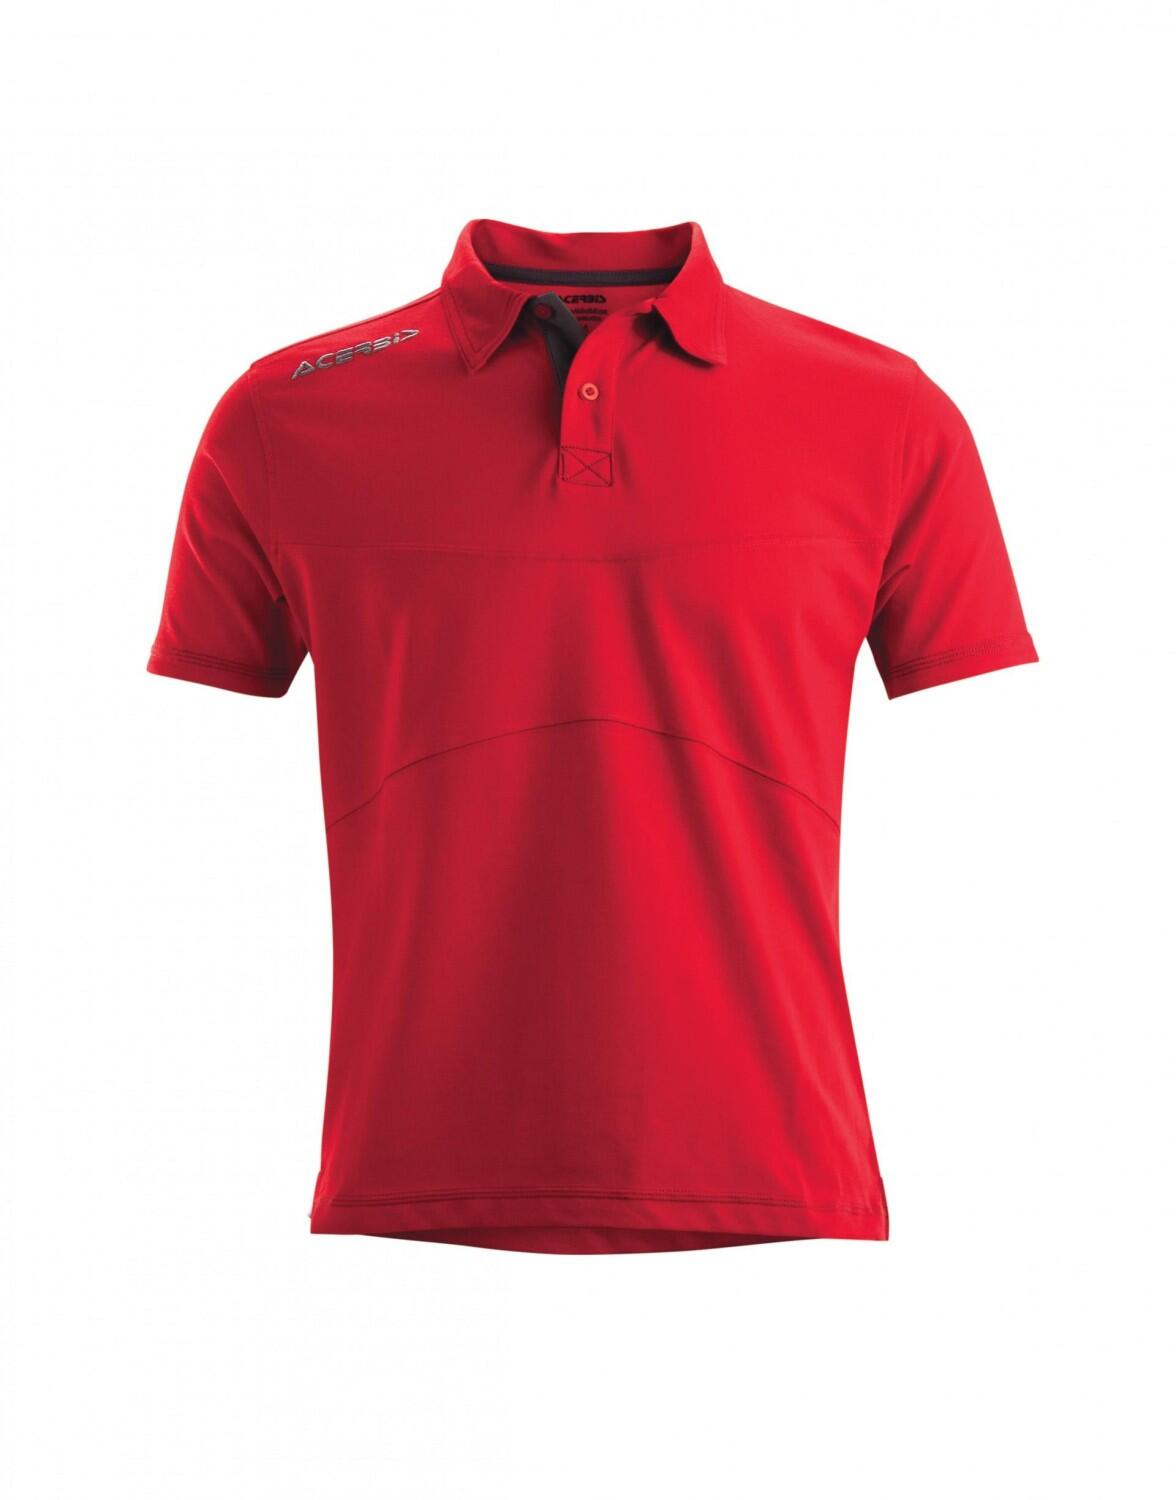 TOP- Poloshirt  Diadema von Acerbis ,  rot , Gr. S,M,2XL- 4XL